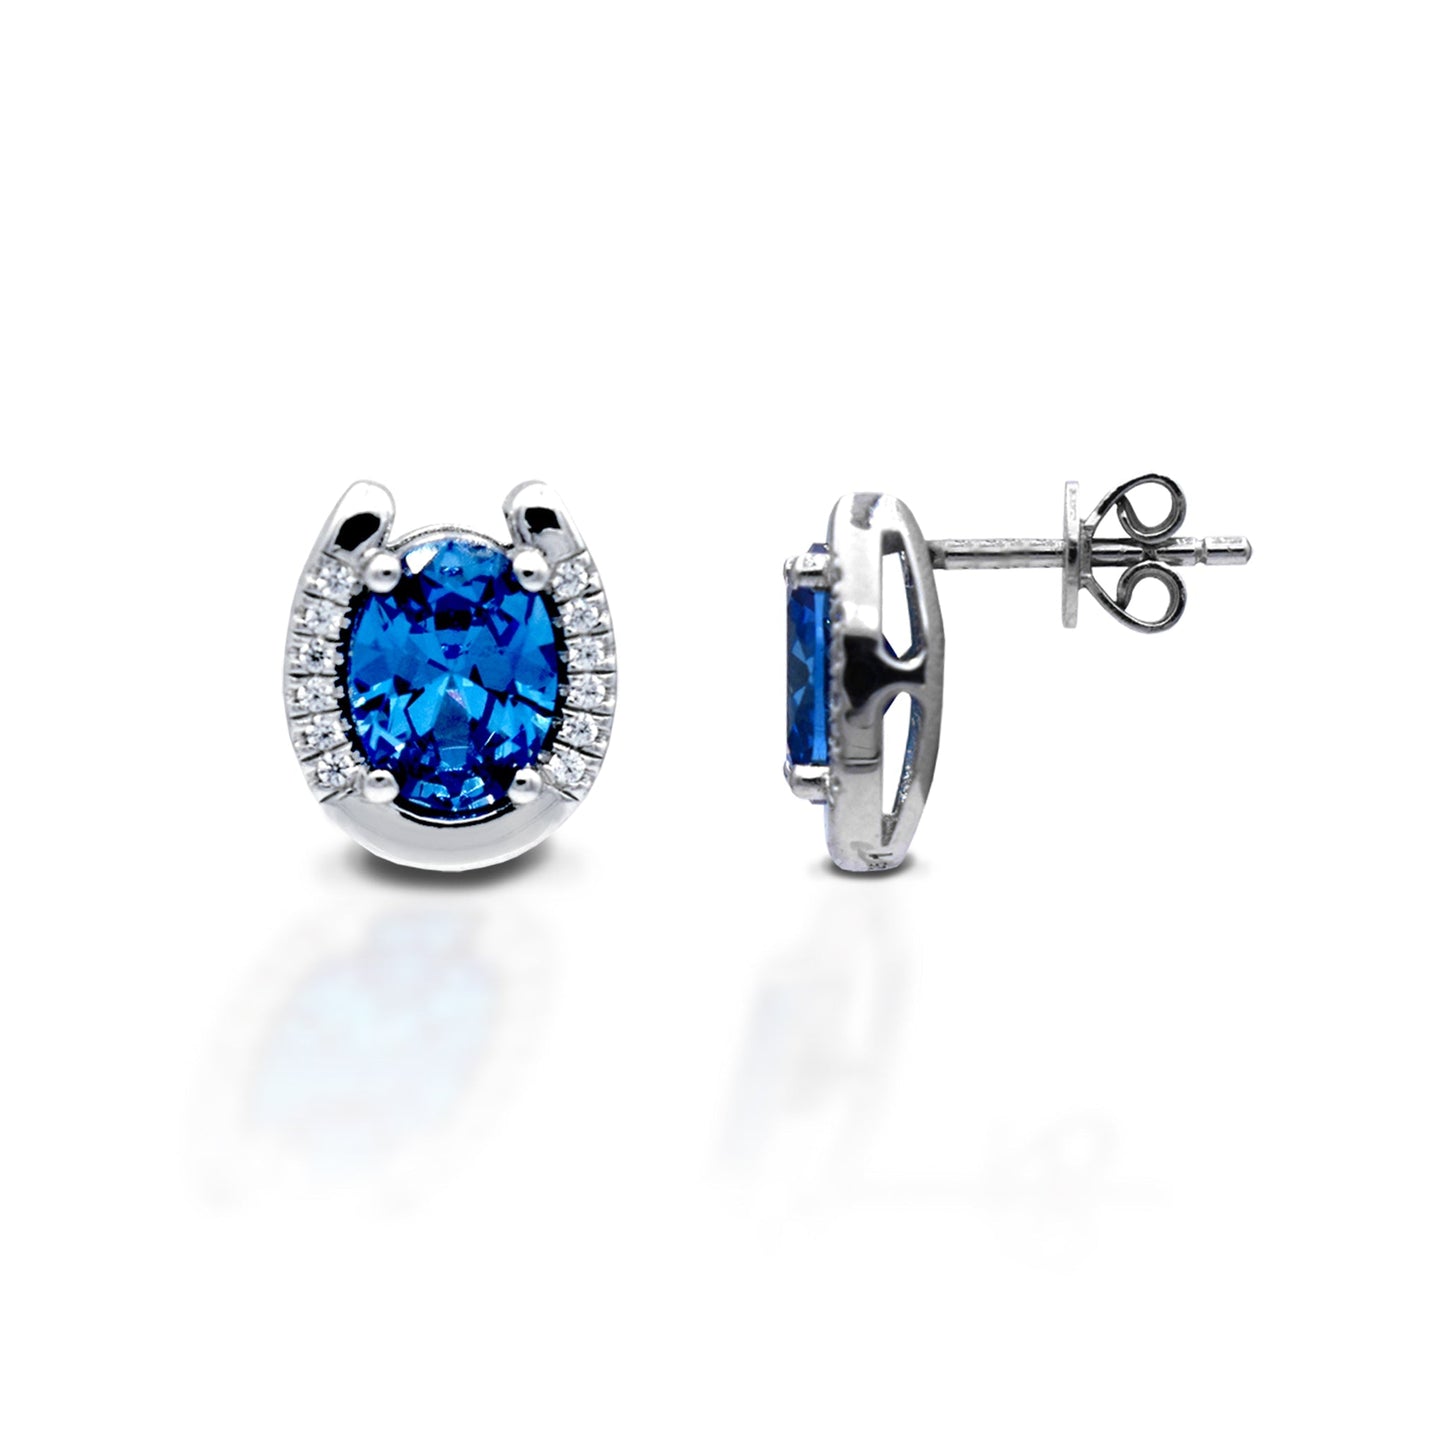 Kelly Herd blue gemstone earrings with diamond halo on white.